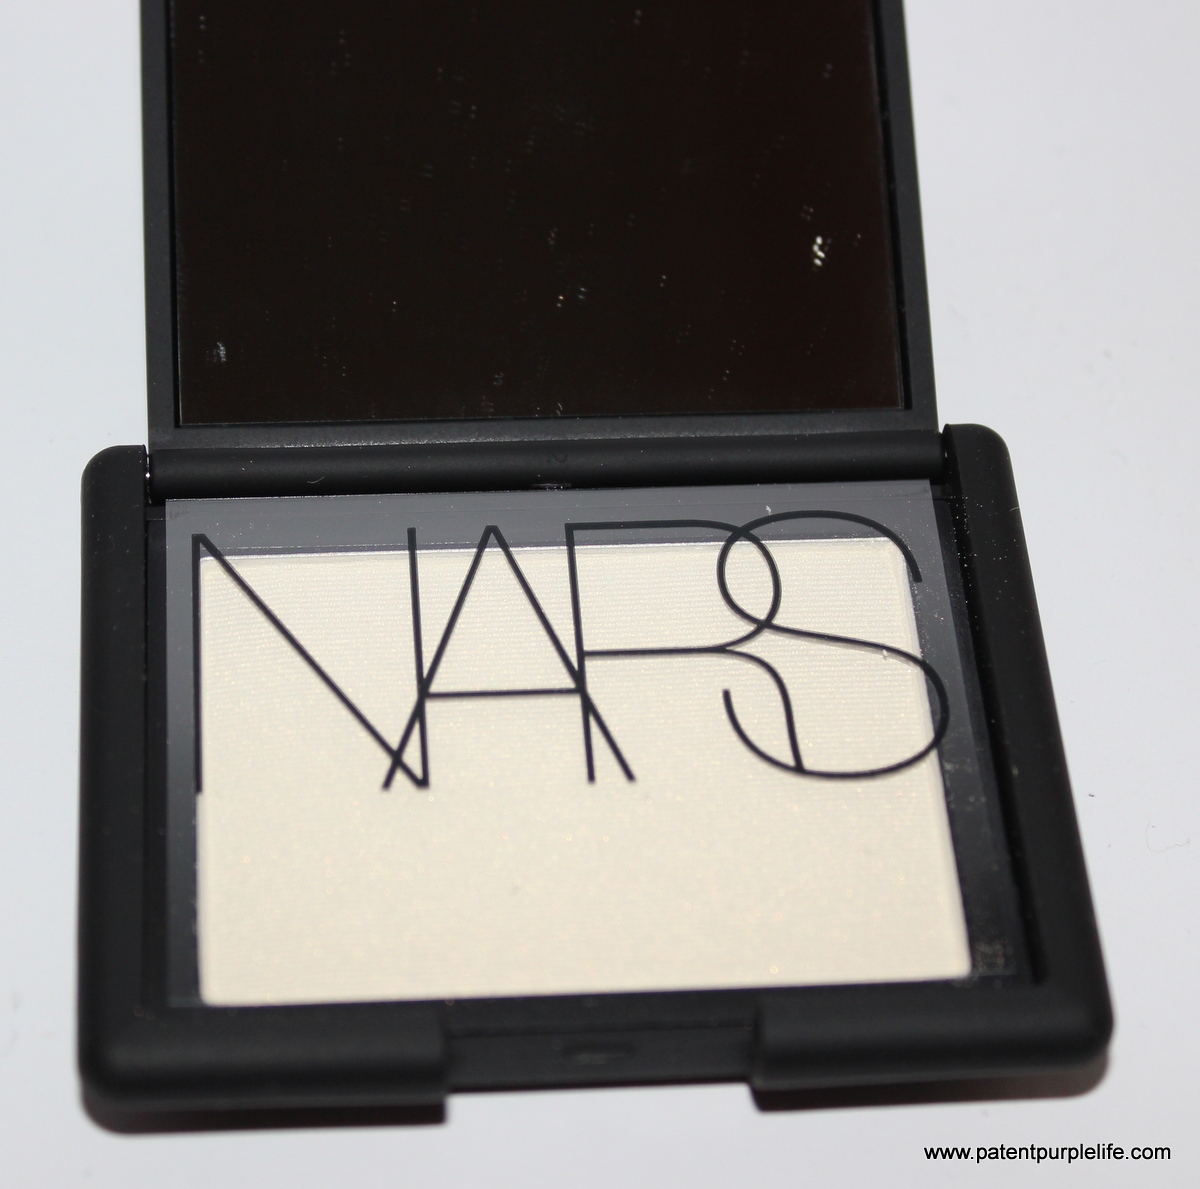 NARS Albatross Highlighting Blush Powder